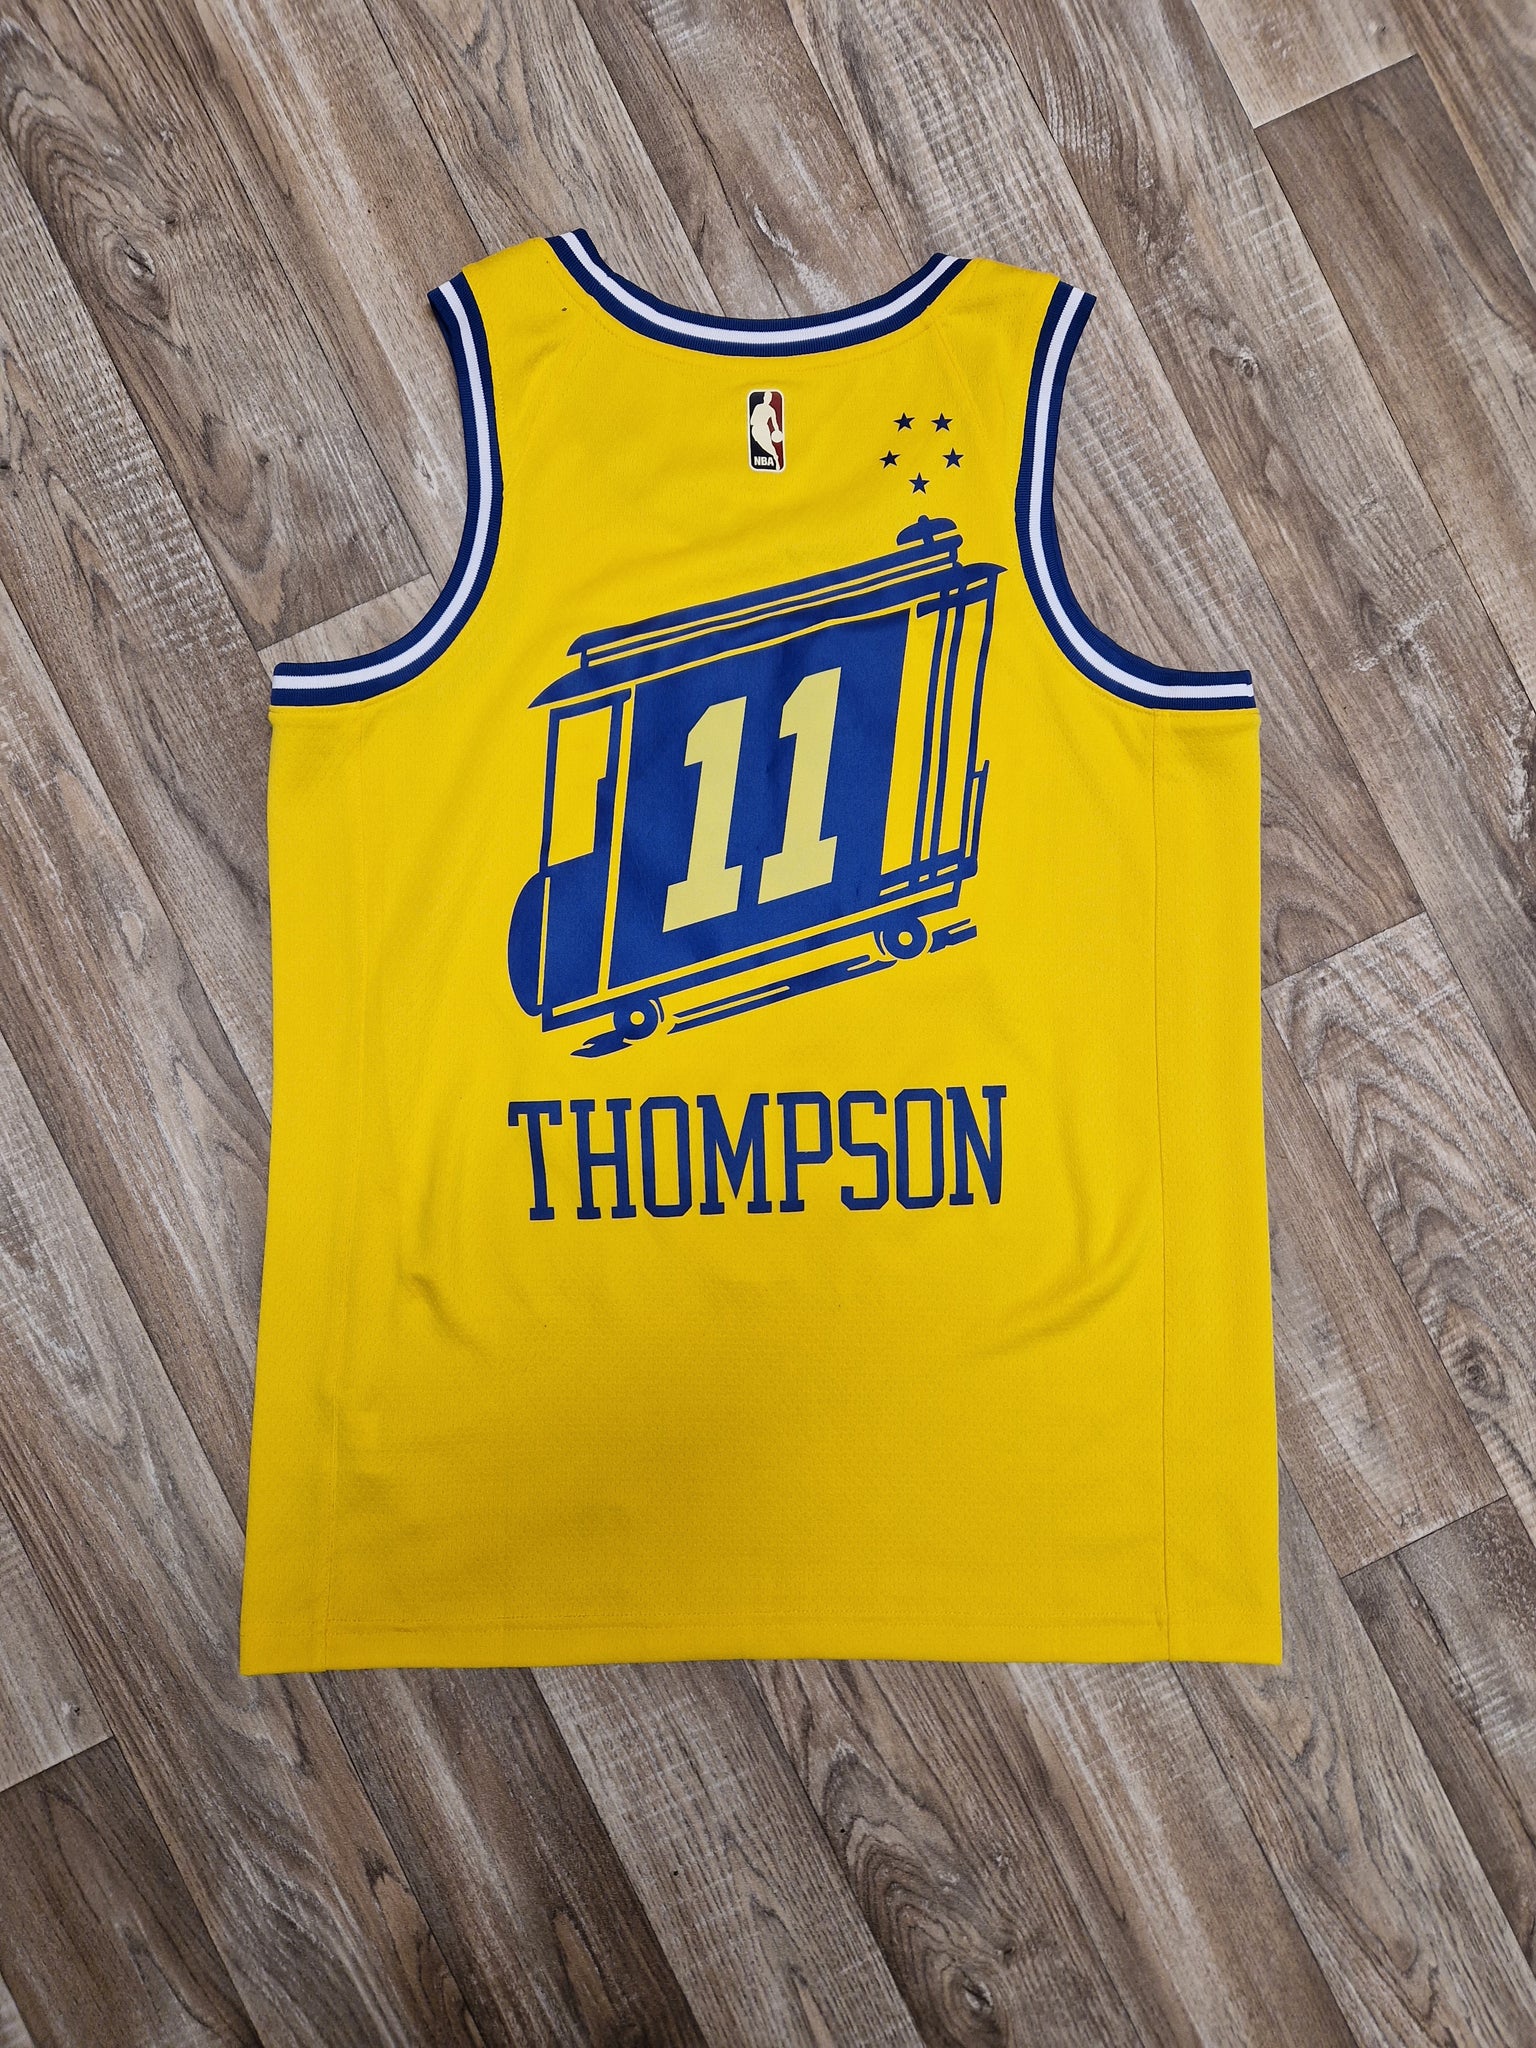 Nike Klay Thompson USA Jersey (Medium)